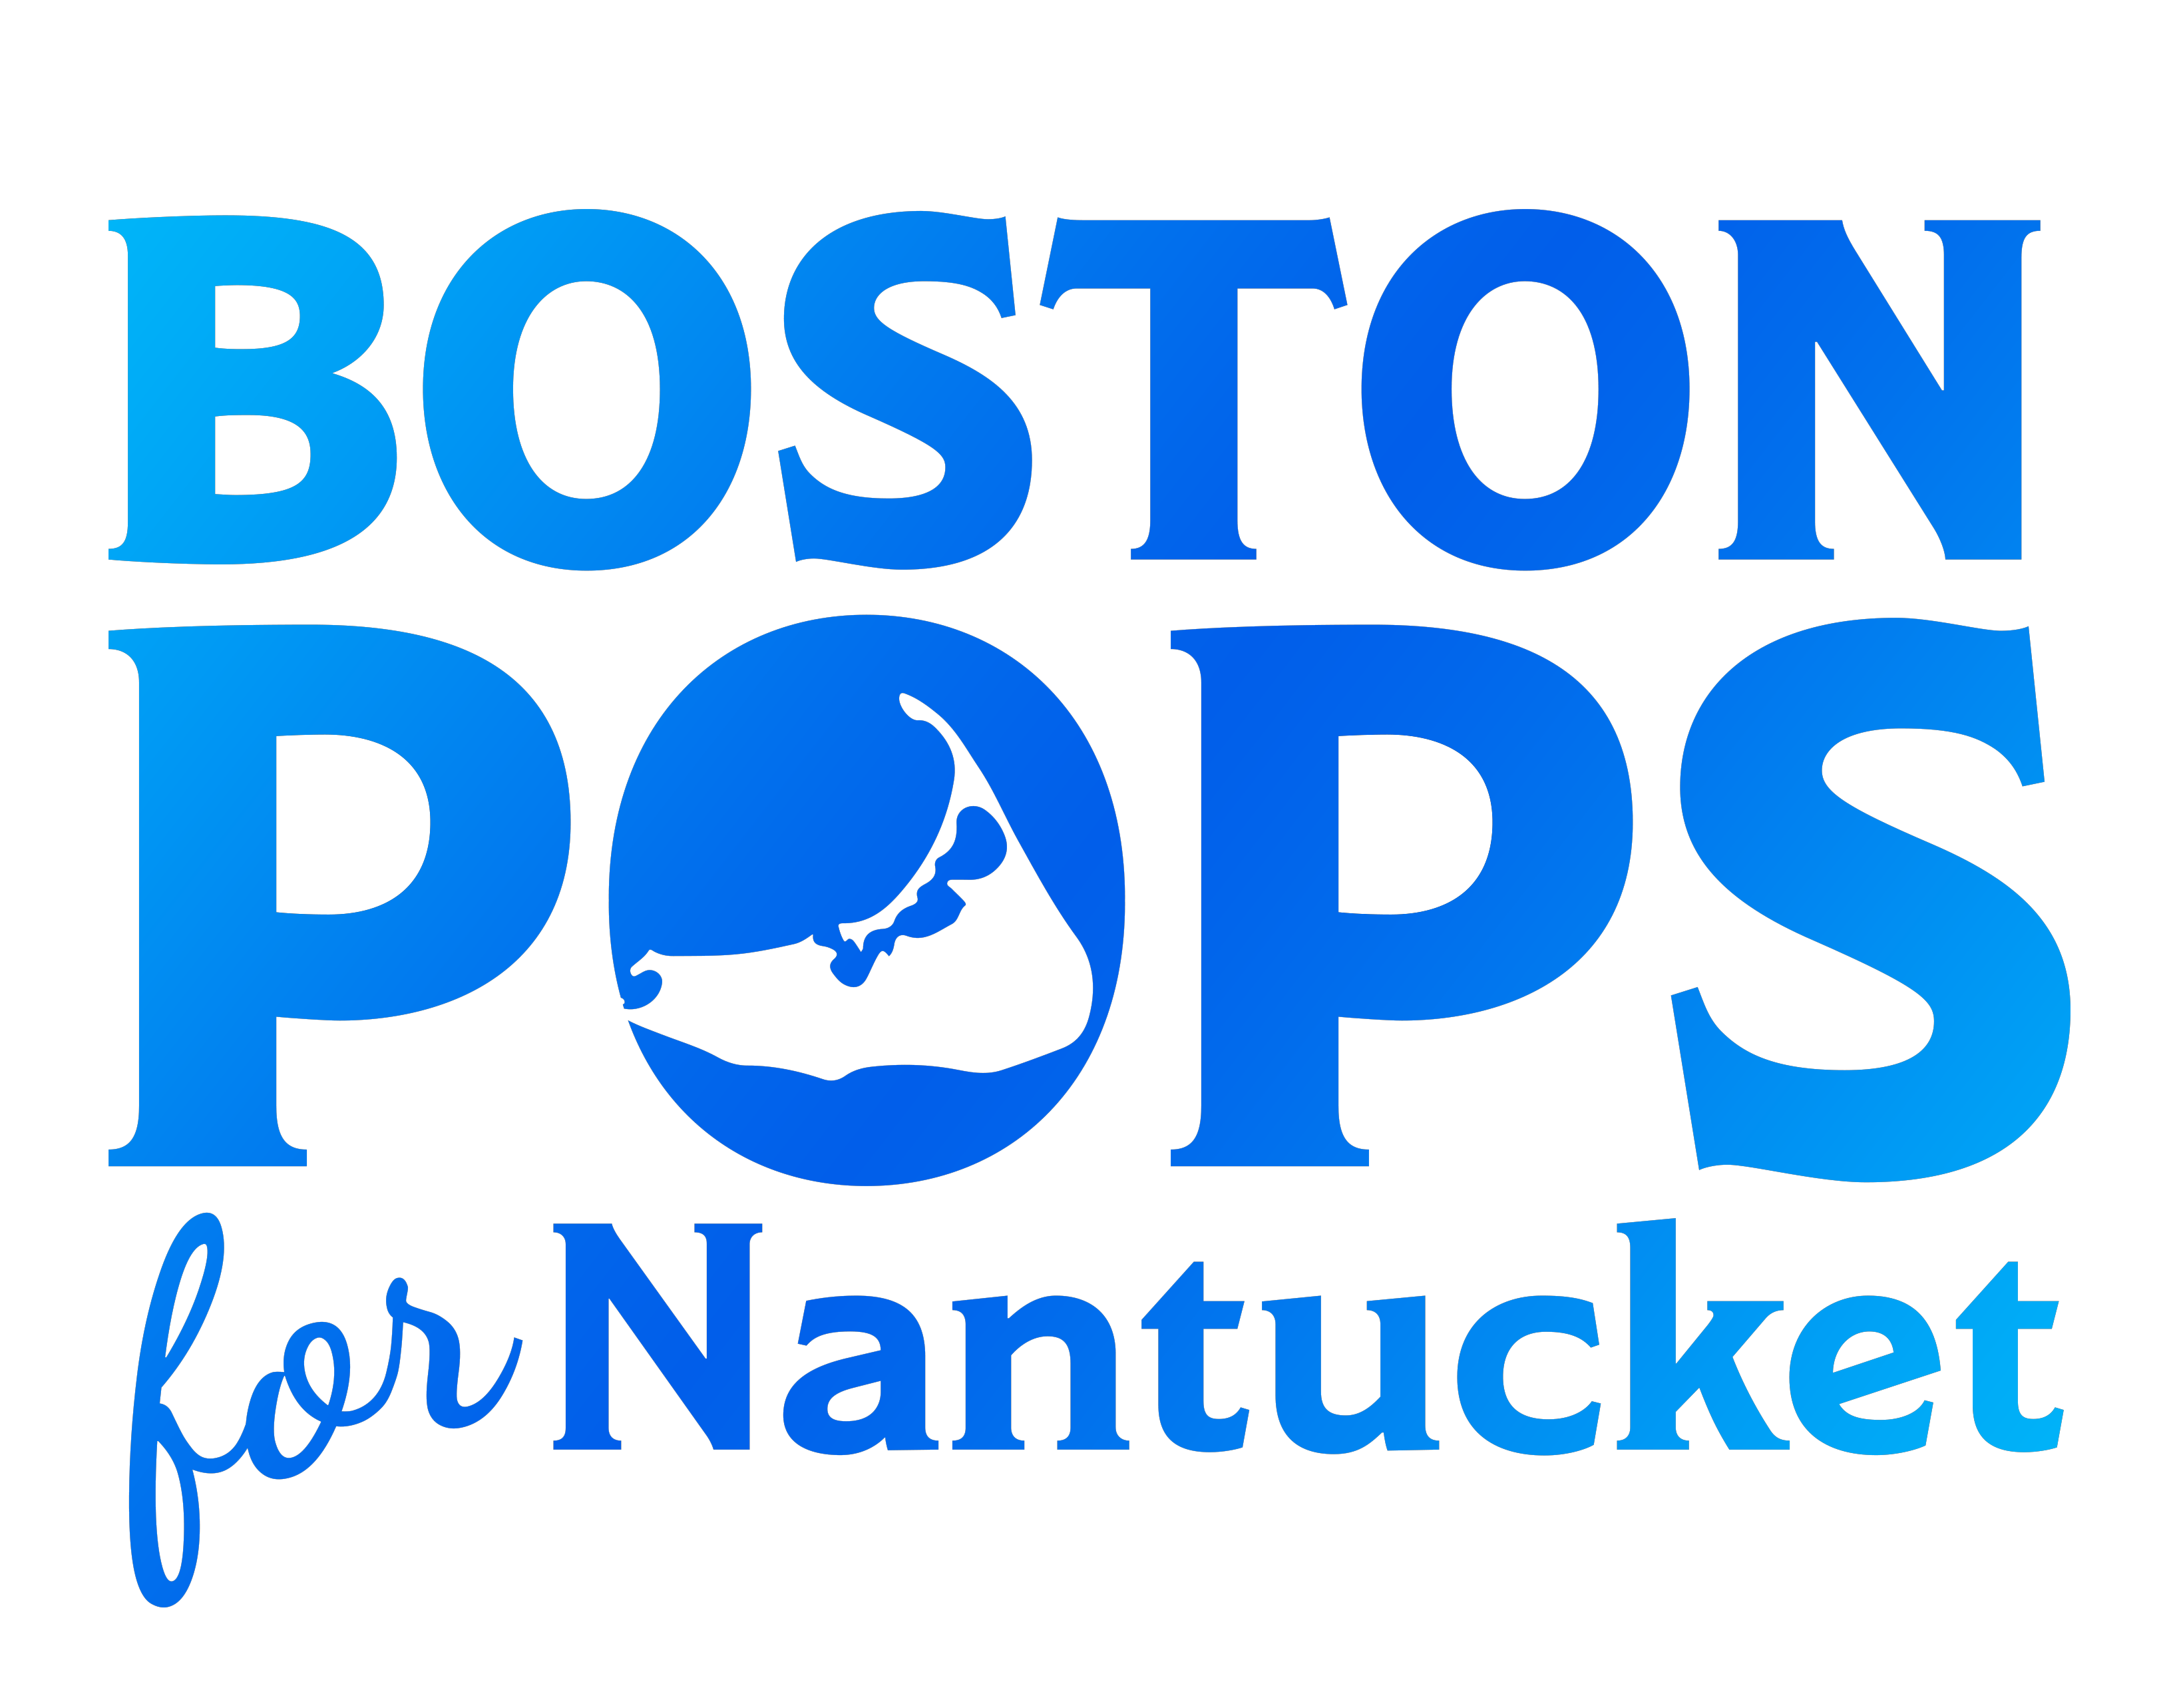 Boston Pops on Nantucket logo